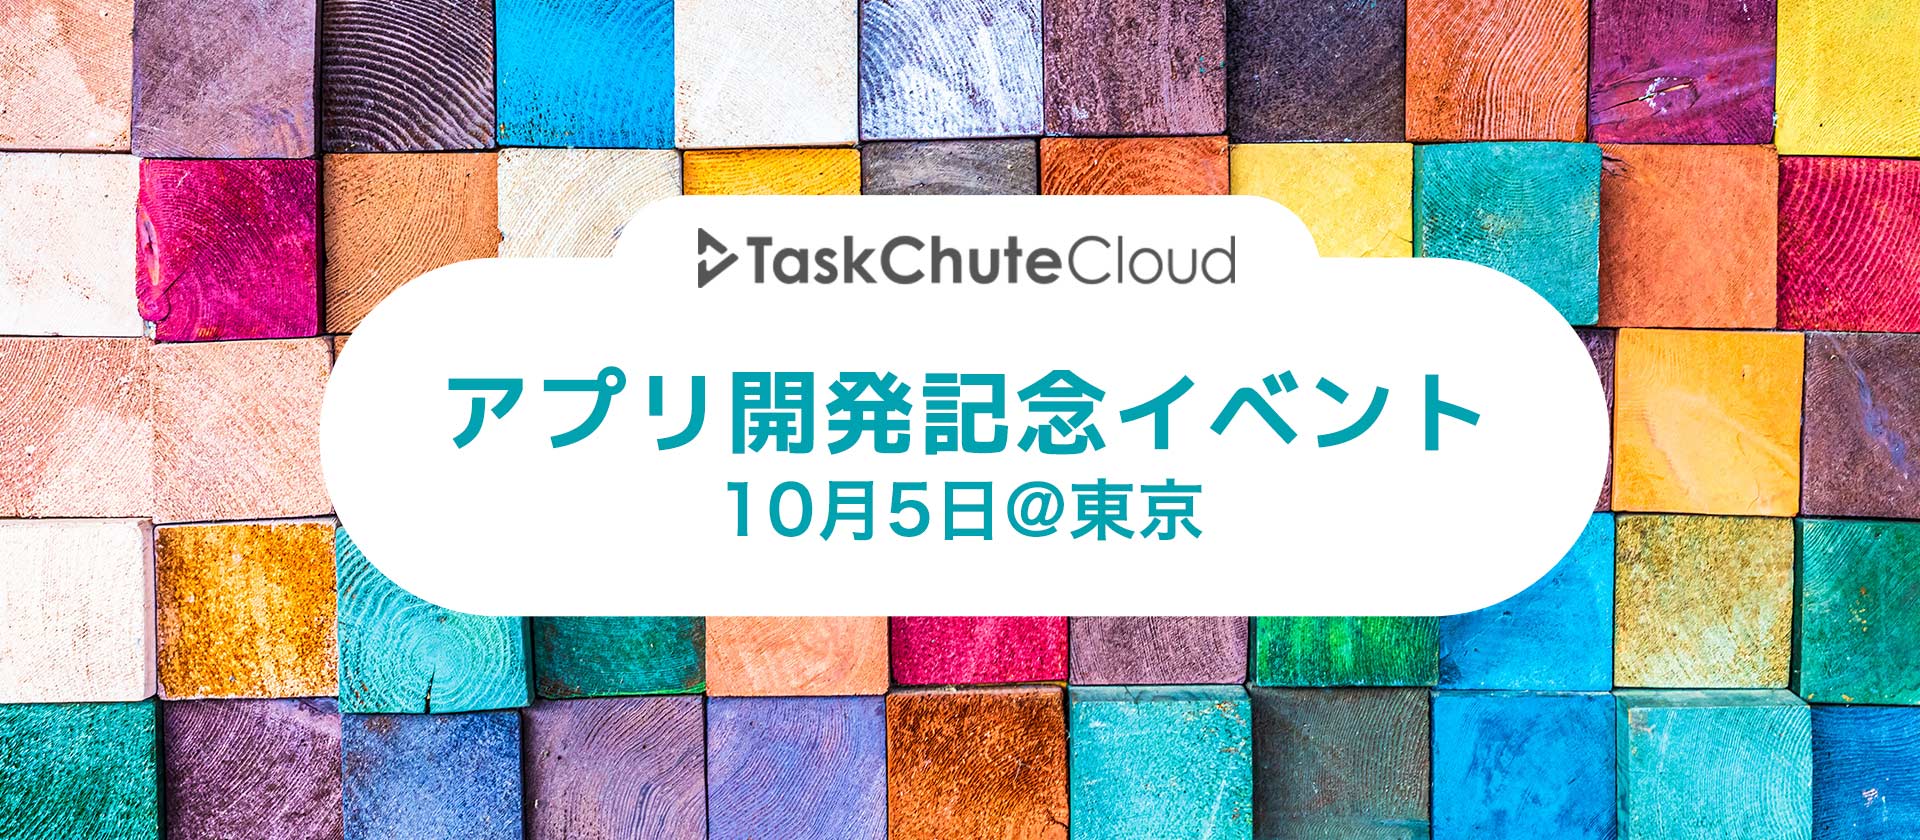 TaskChute Cloudアプリ開発記念イベント